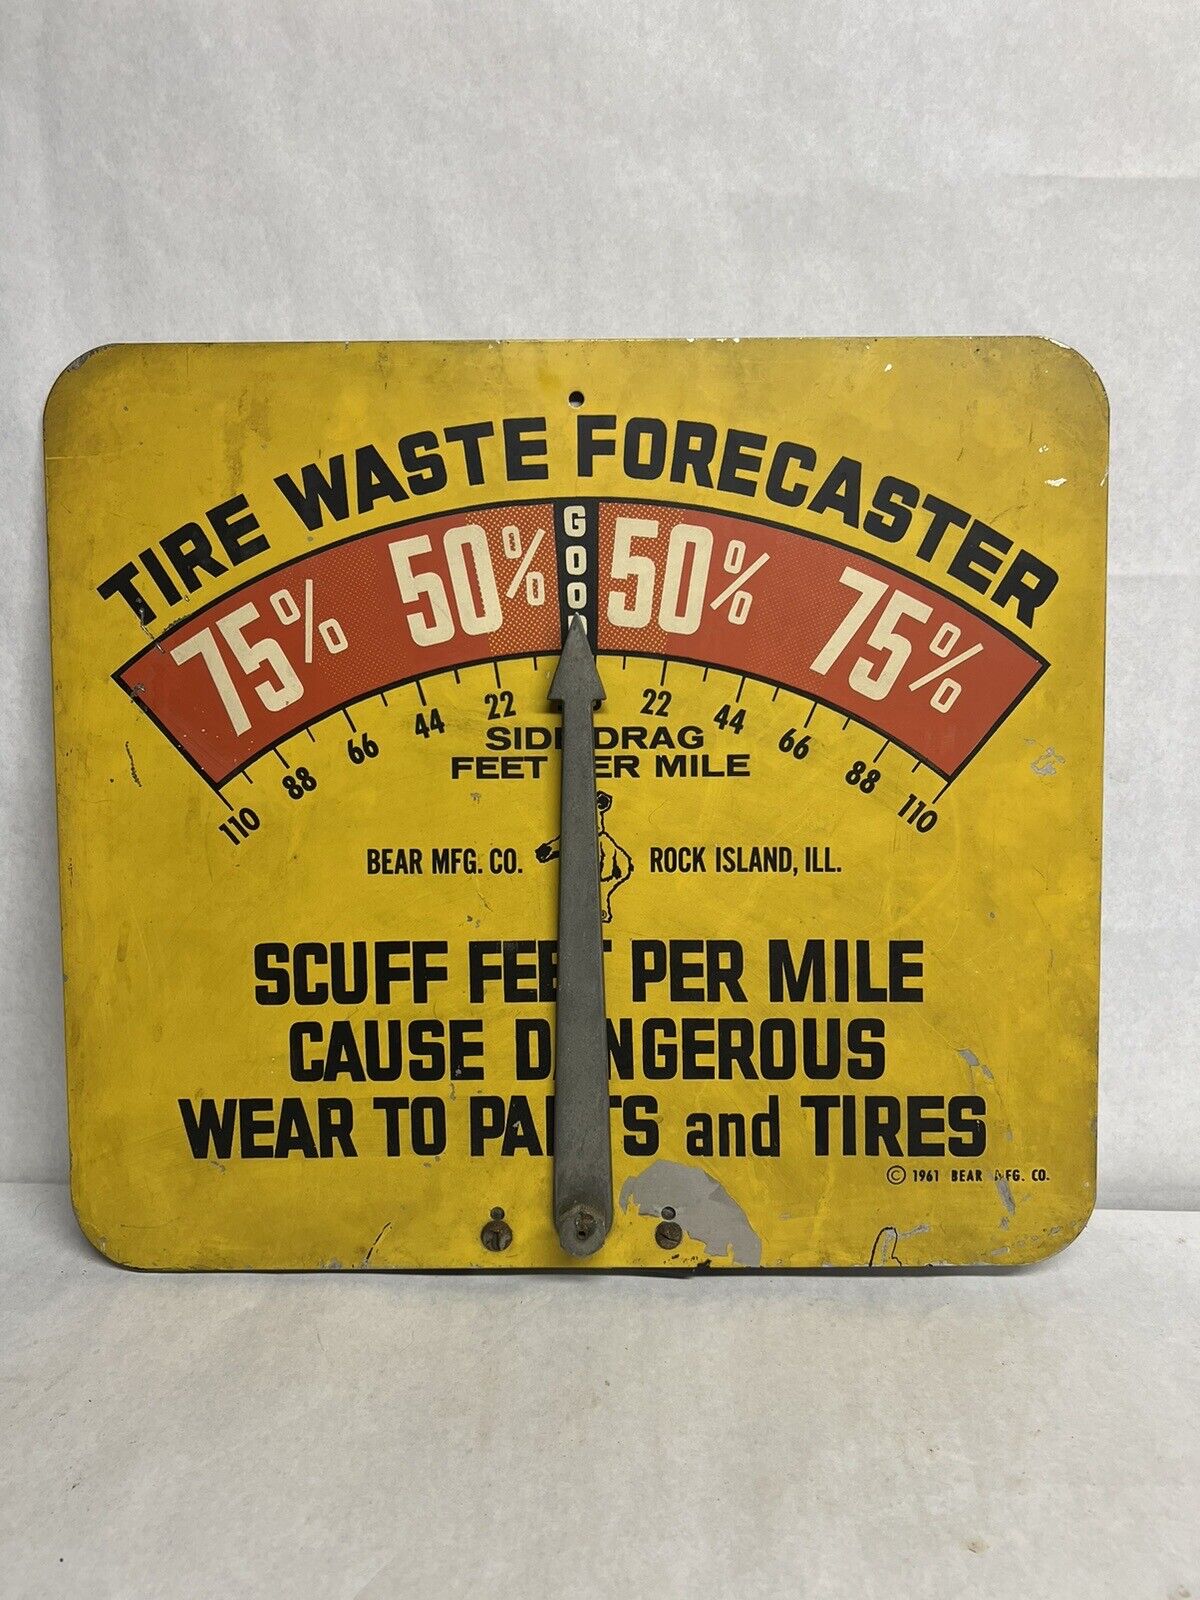 Original 1961 Bear Mfg Co Tire Waste Forecaster Metal Sign with Gauge Good Color